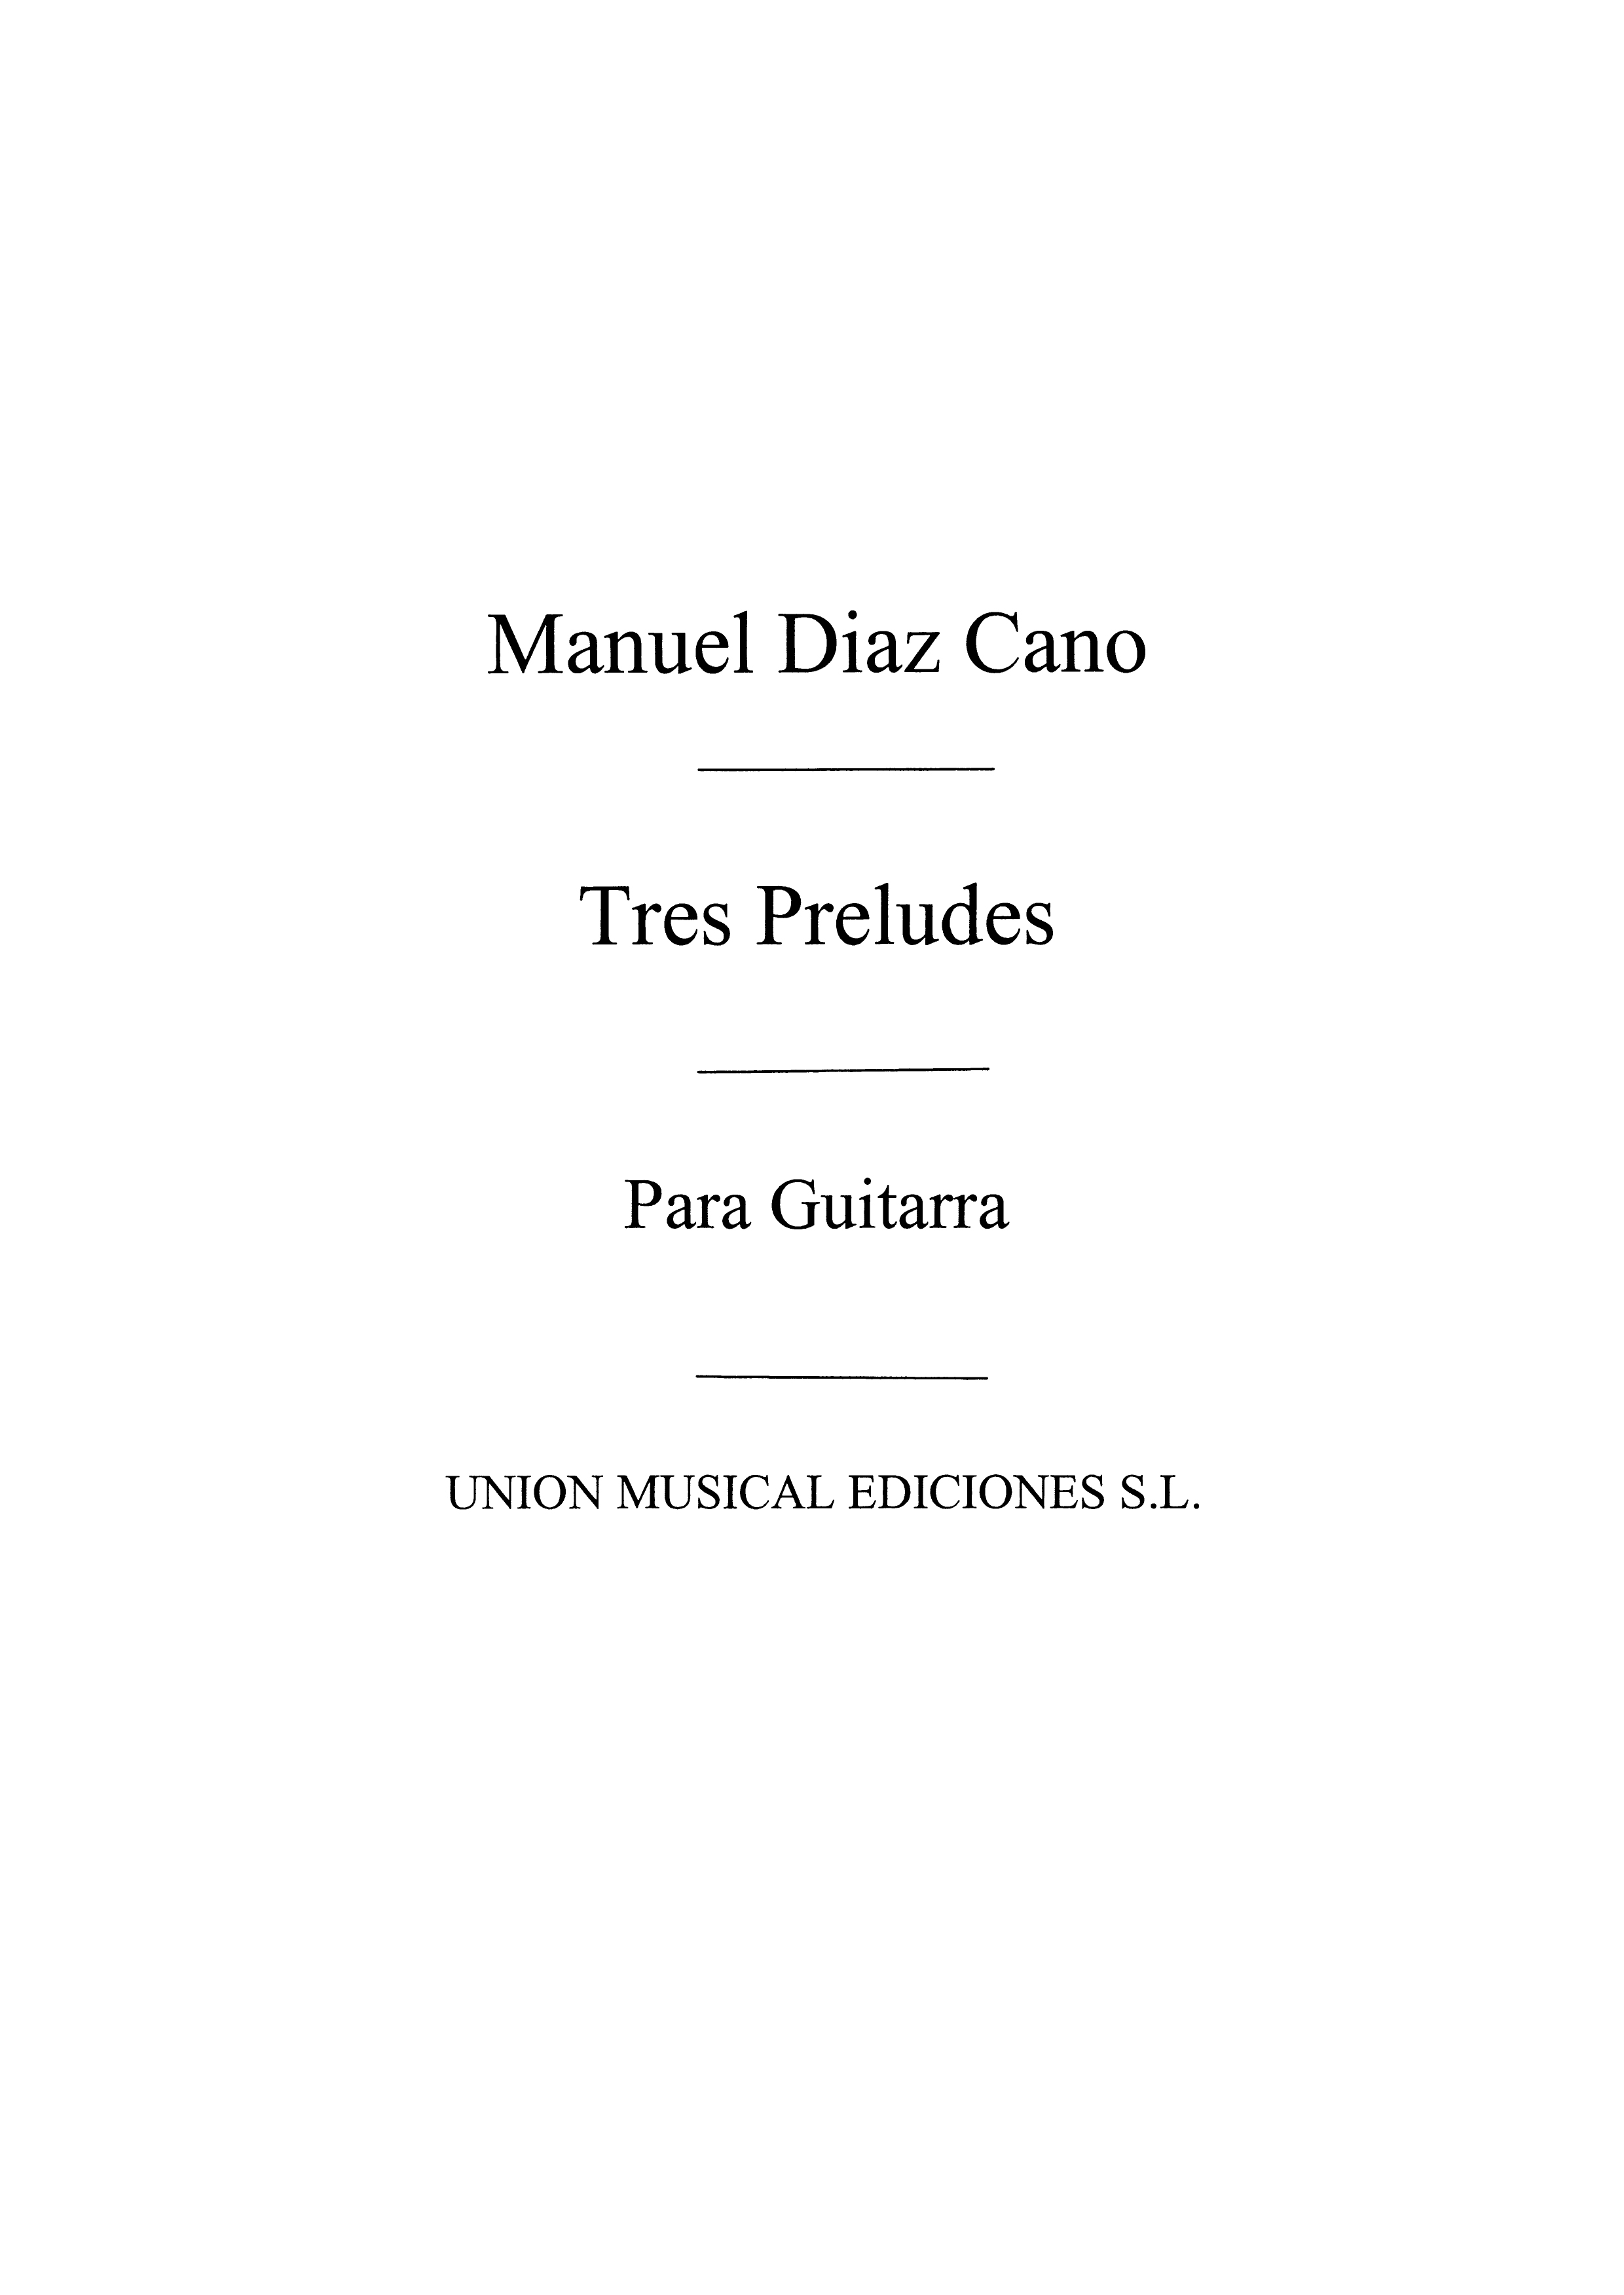 Manuel Diaz Cano: Tres Preludios: Guitar: Instrumental Work